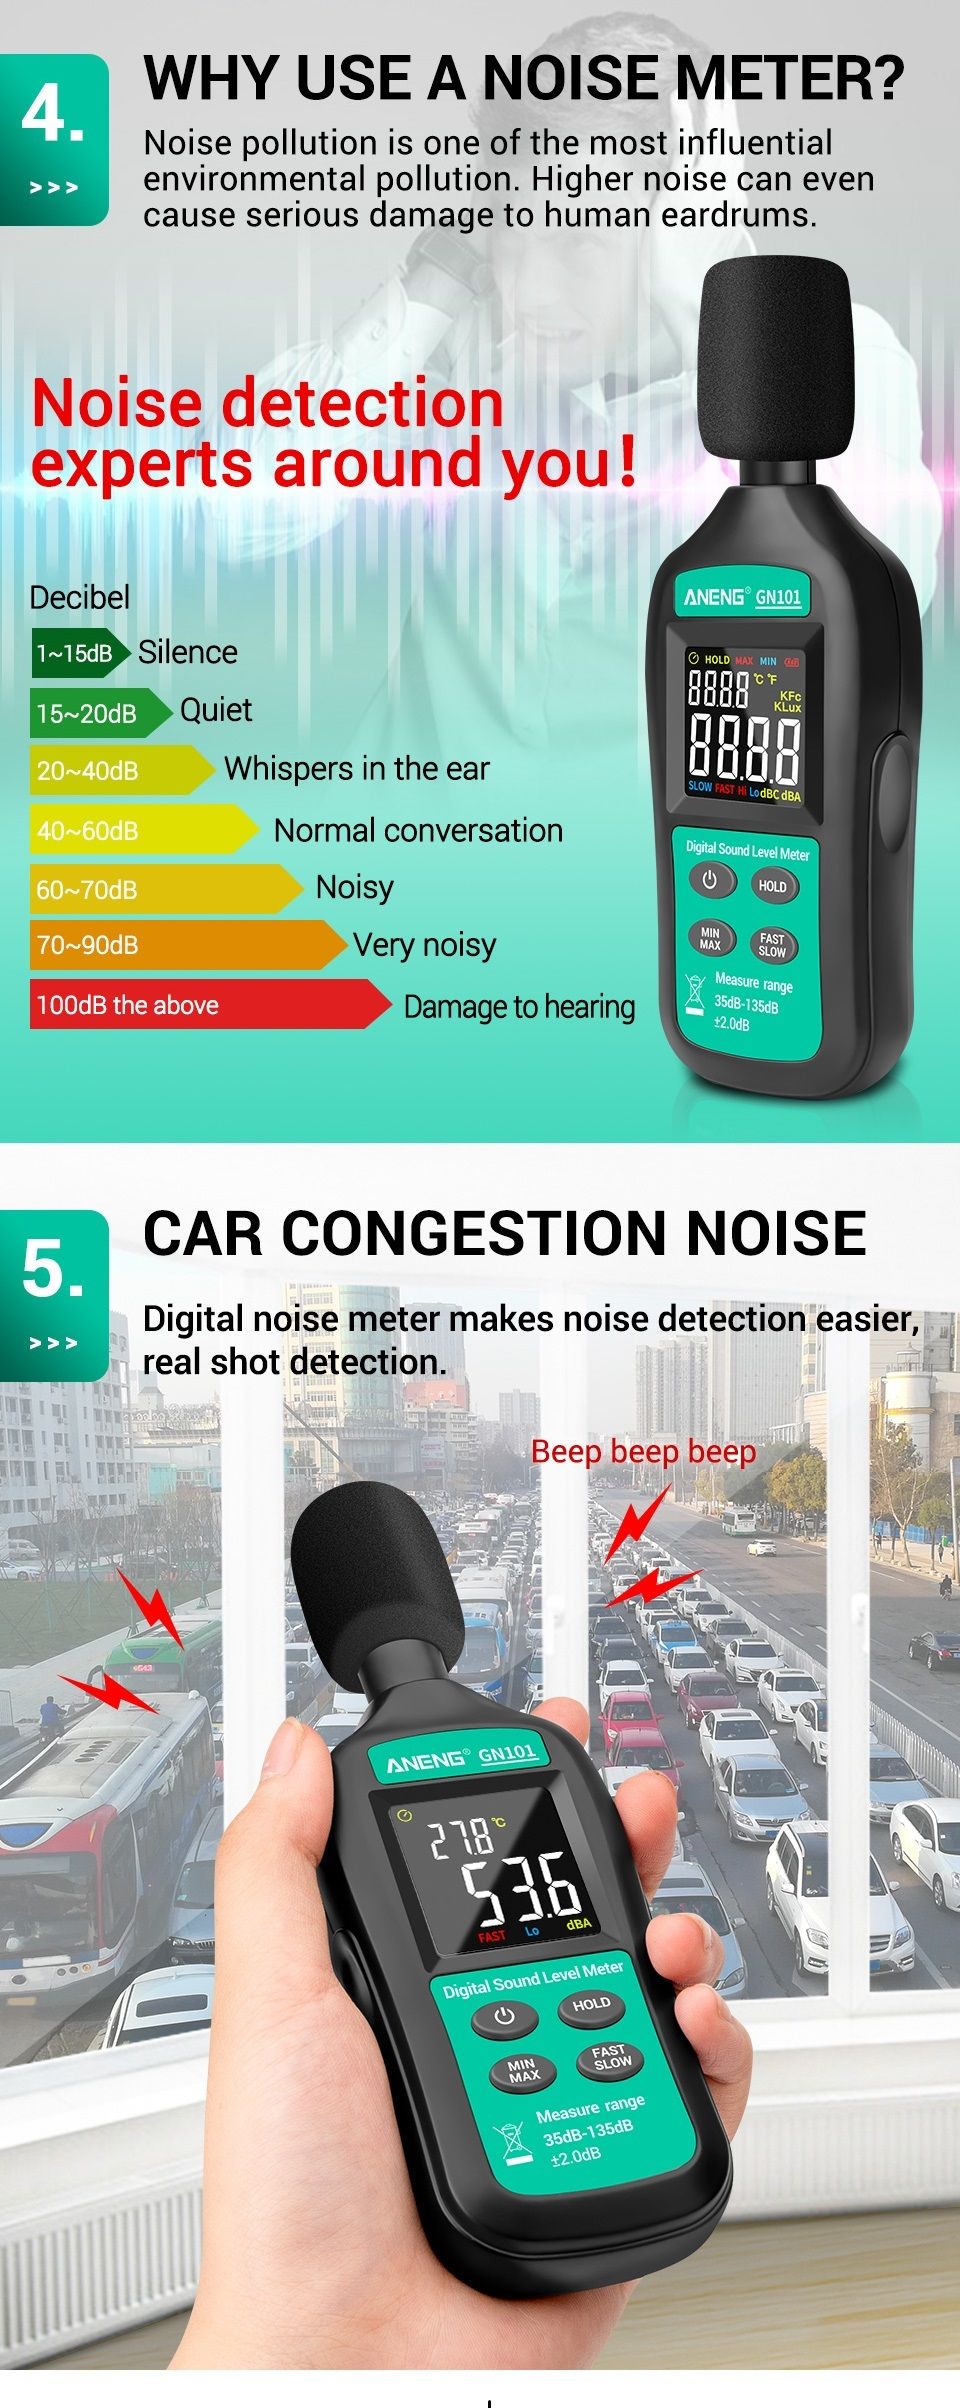 ANENG-GN101-Digital-Noise-Meter-Measurement-35-135db-Intelligent-Sound-Level-Meter-Decibel-Monitor-L-1750263